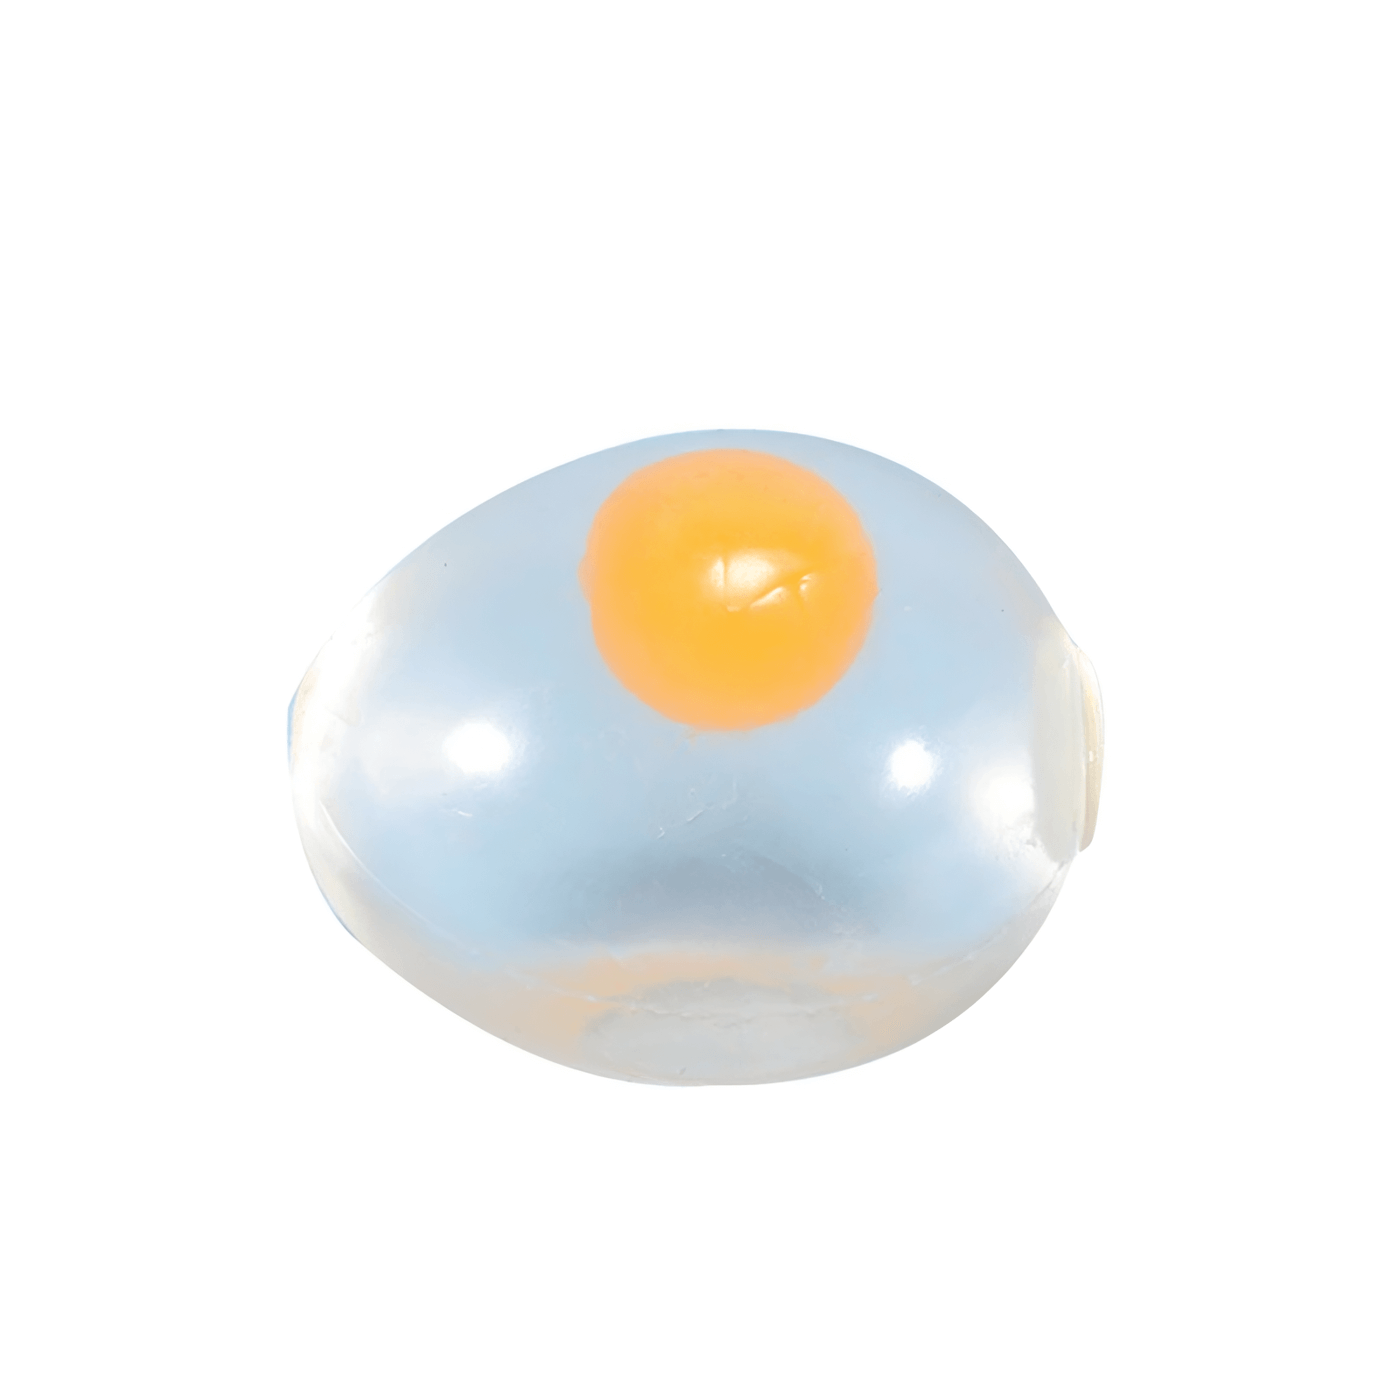 Egg stress ball